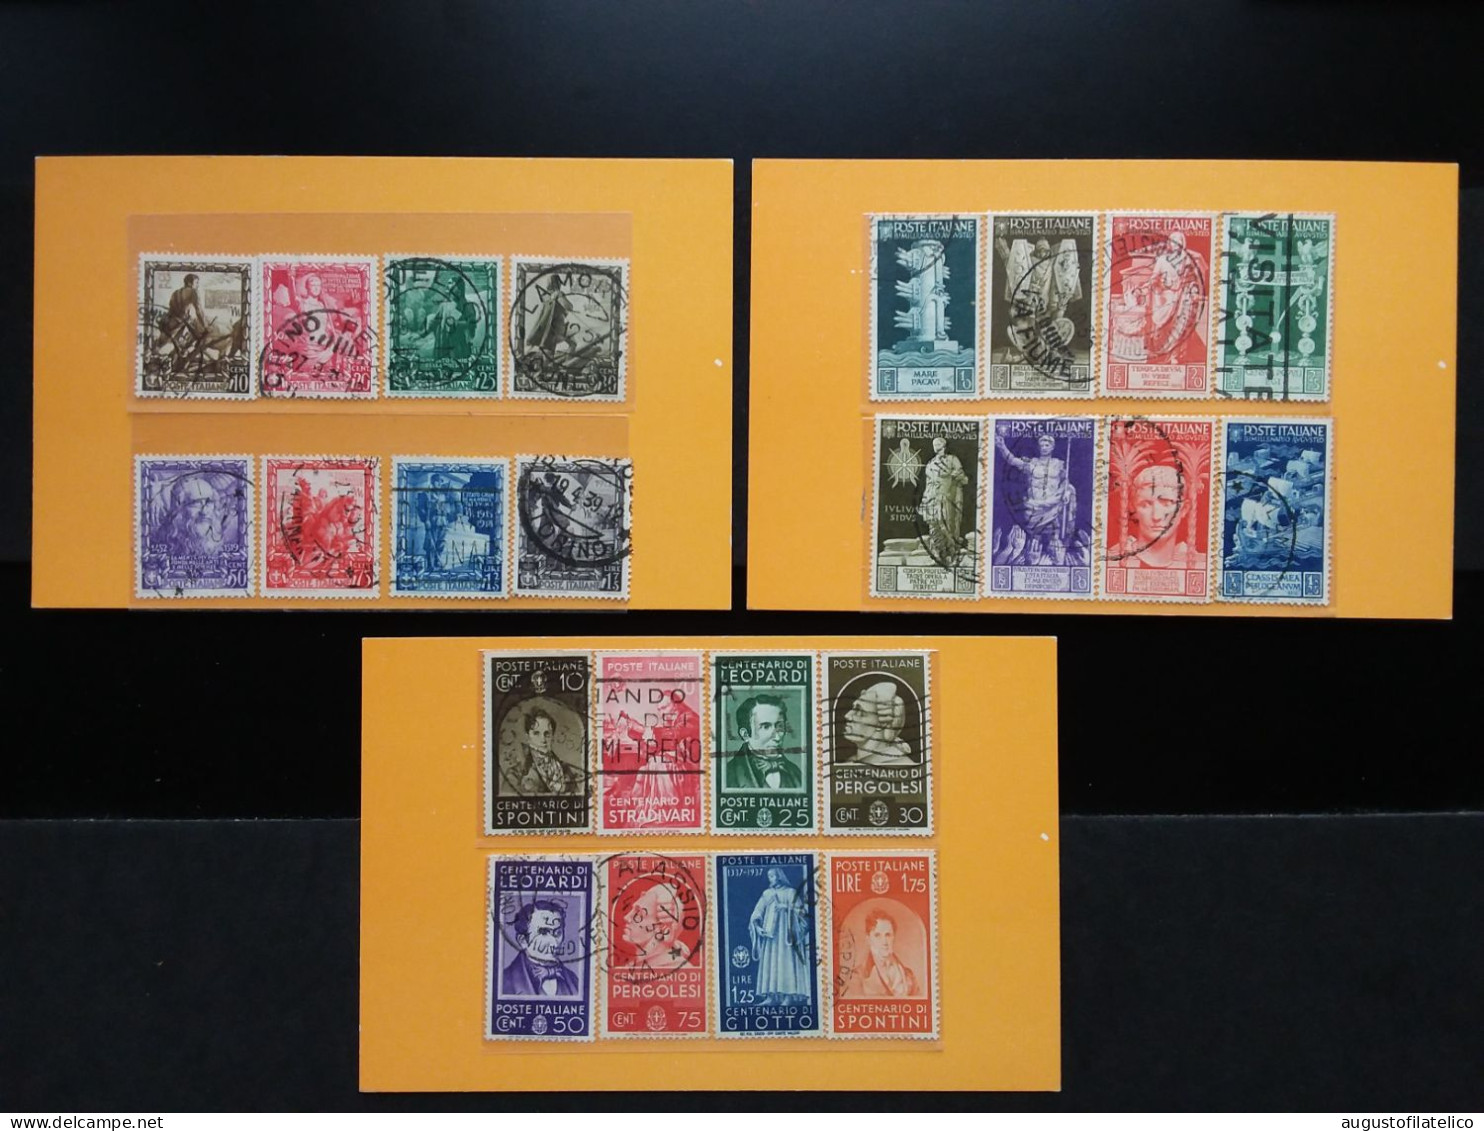 REGNO - Commemorativi Nn. 416/23 + 426/33 + 439/46 - Timbrati - Valore Sassone 60 Euro + Spese Postali - Afgestempeld